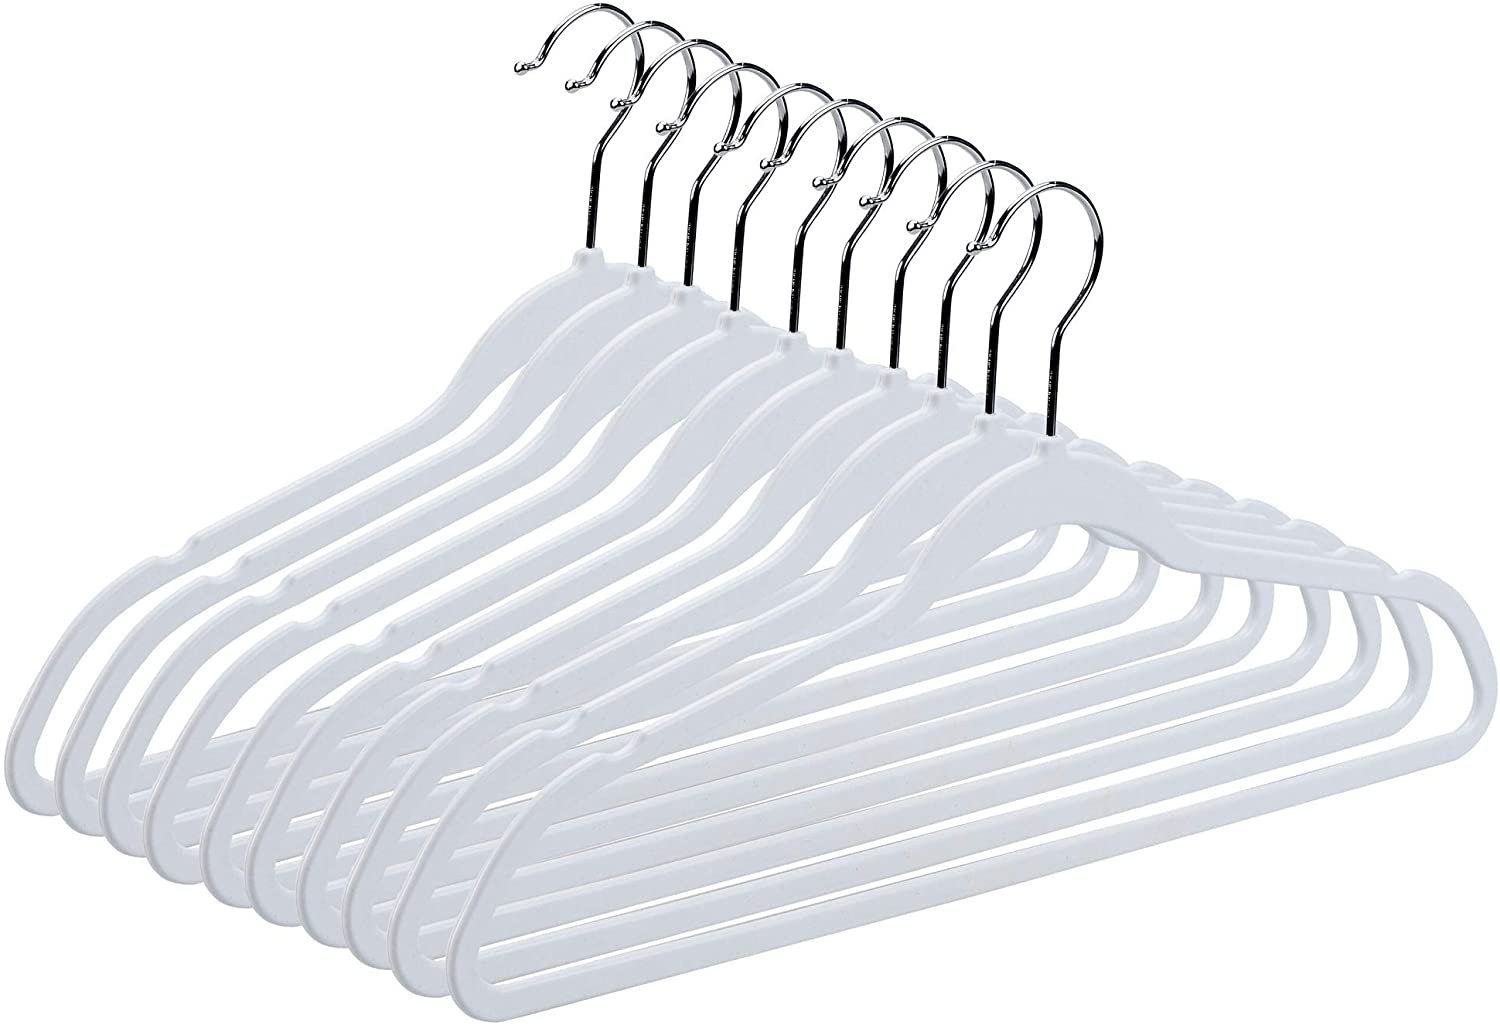 Quality Hangers Clothes Hangers 50 Pack - Non-Velvet Plastic Hangers for Clothes -Heavy Duty Coat Hanger Set -Space-Saving Closet Hangers with Chrome Swivel Hook, Functional Non-Flocked Hangers, White